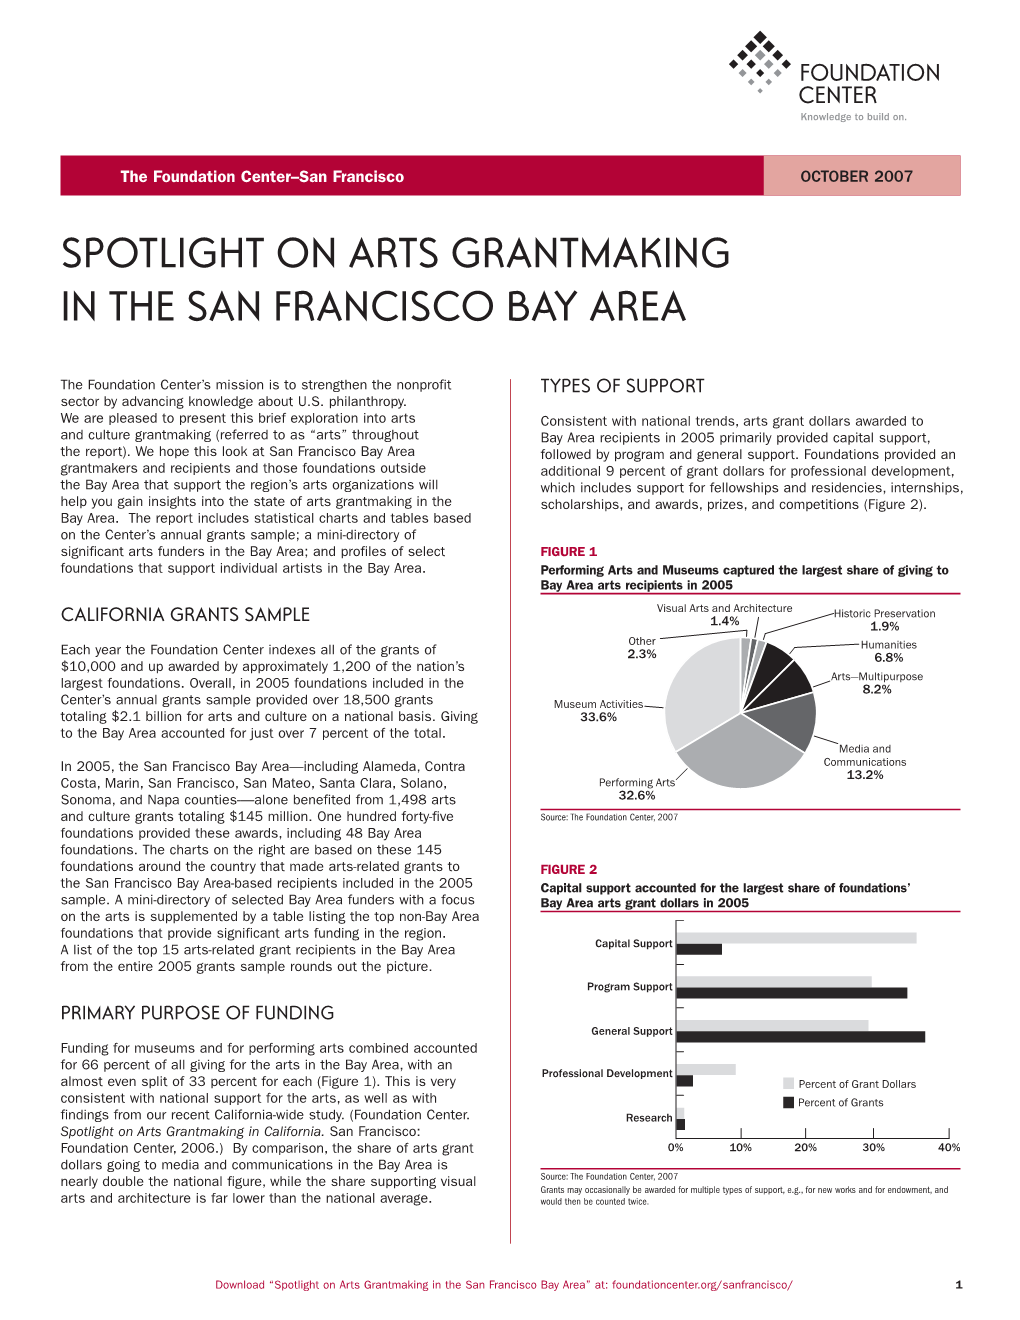 Spotlight on Arts Grantmaking in the San Francisco Bay Area